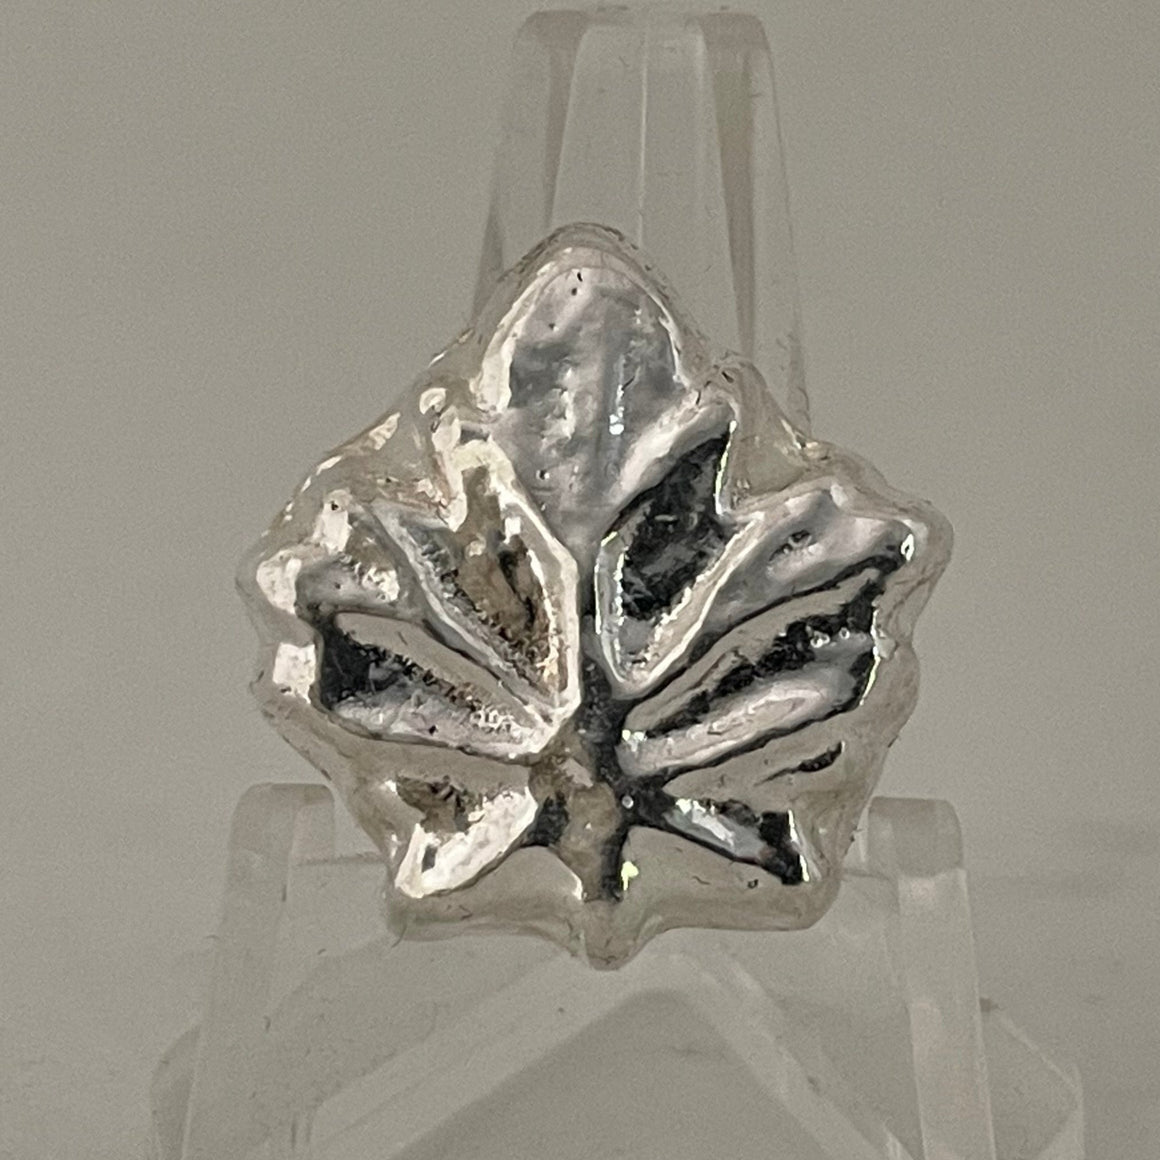 Maple Leaf by Tomoko's Enterprize, 1oz .999 Fine Silver Poured Art